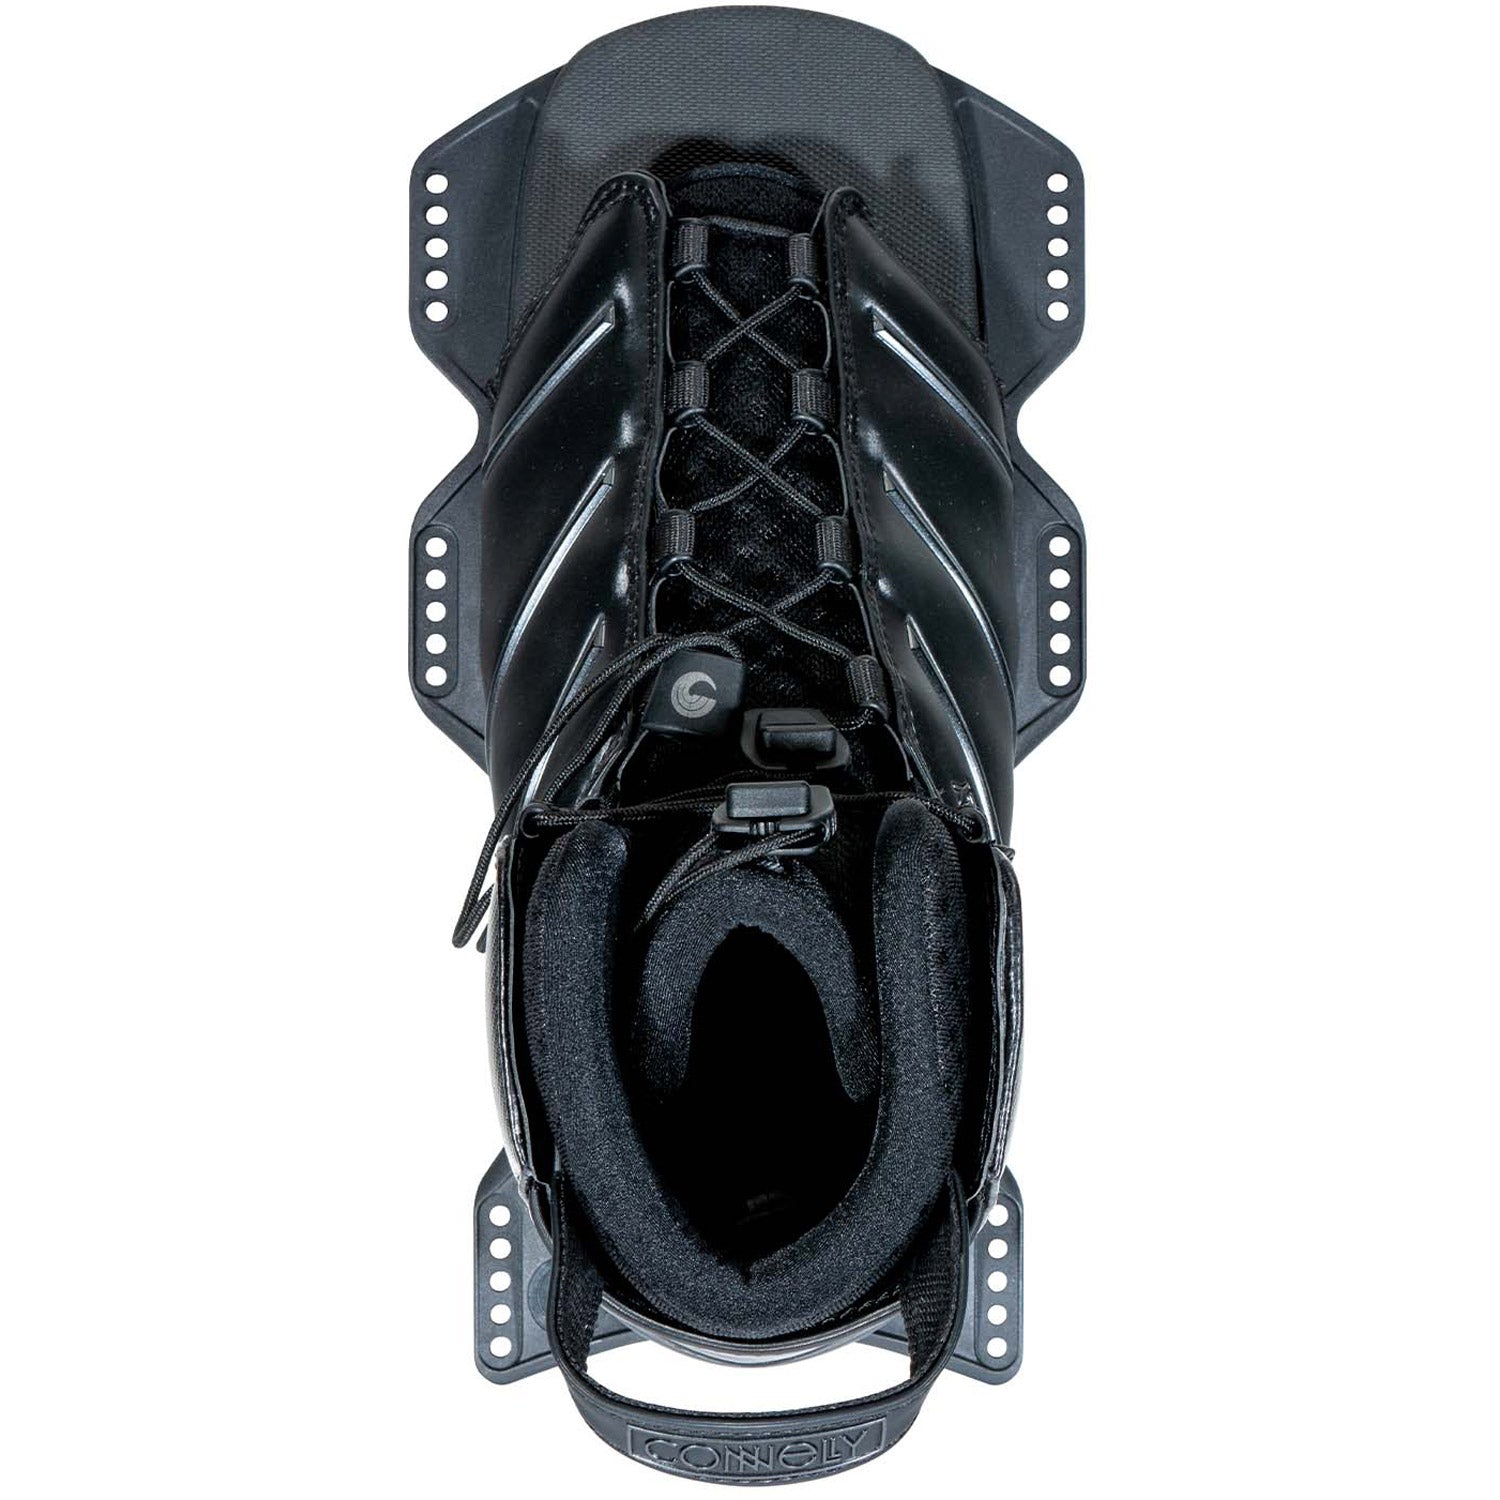 Carbon V Slalom Ski w/ Tempest Boot Package